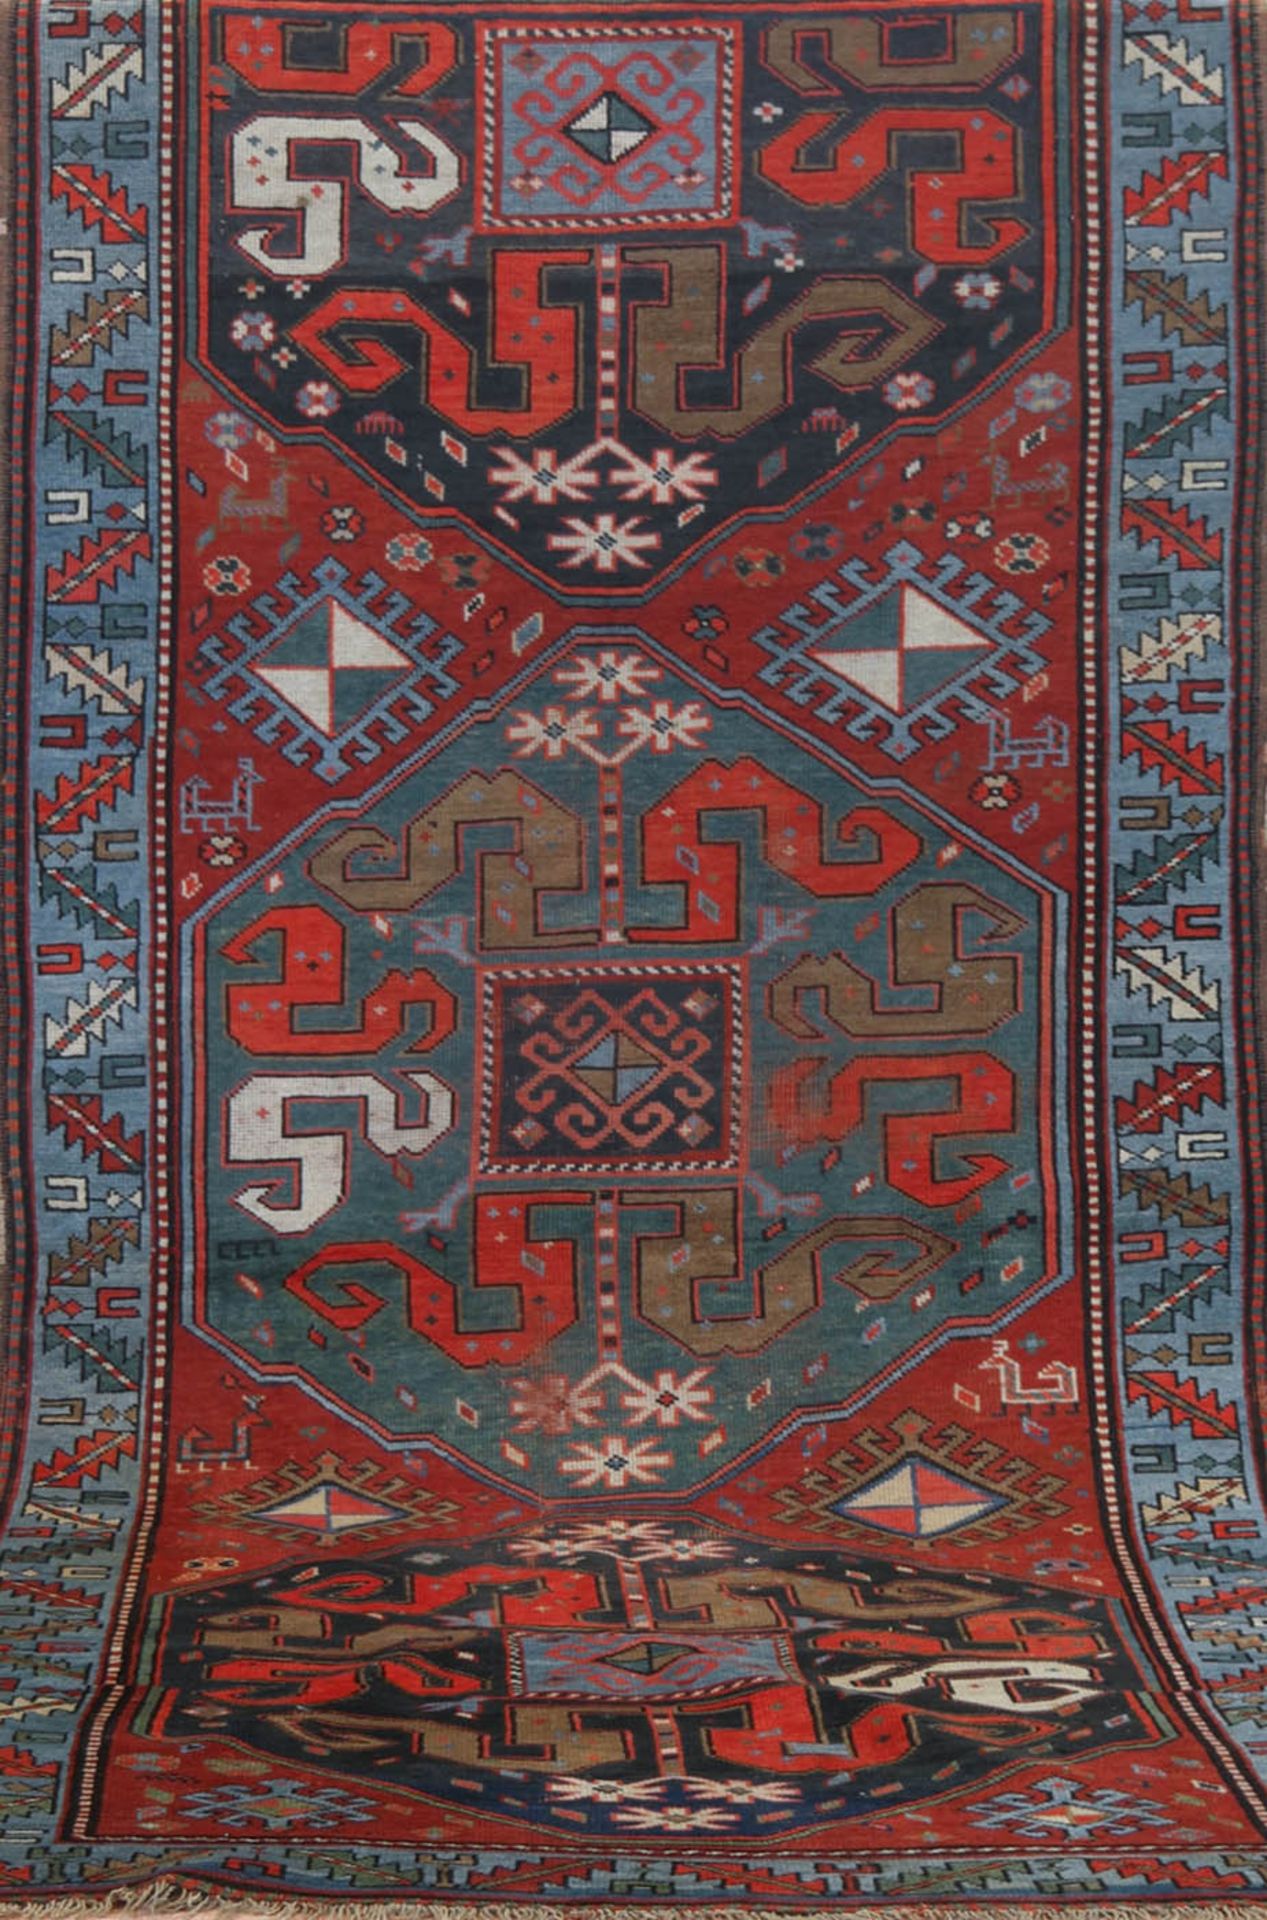 Wolkenband-Kasan, Karabach-Gebiet Kaukasus, rot/blaugrundig mit ornamentalem Muster, belaufen, Fran